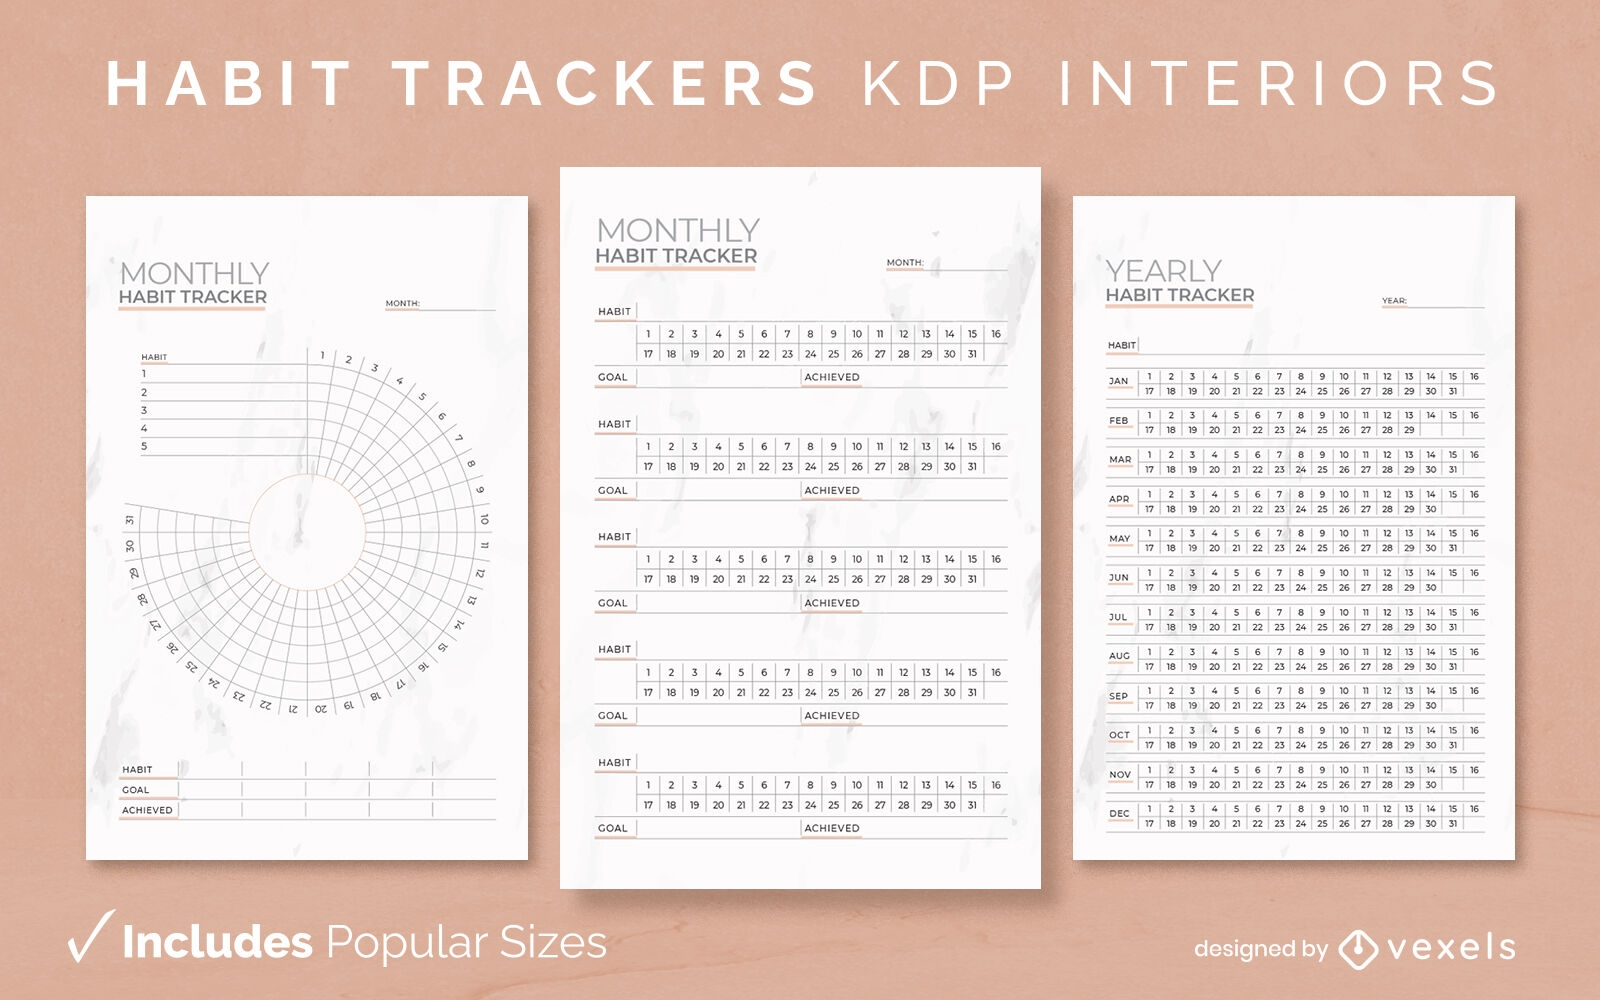 Habit tracker journal design template KDP